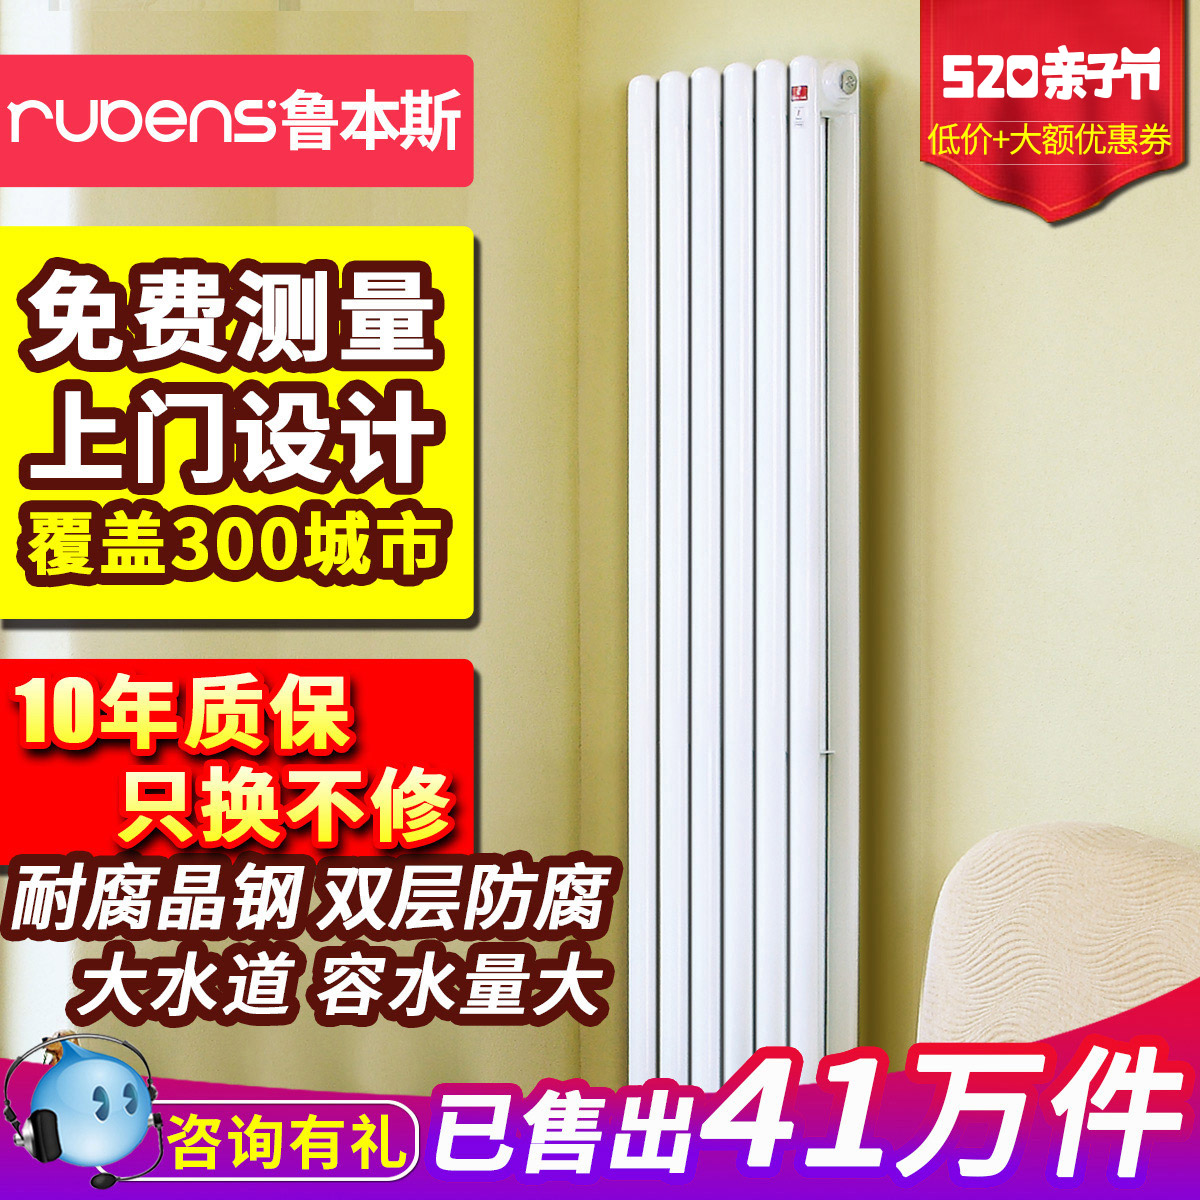 Rubens Steel Heating Plate Household Water Heating Radiator Living Room Bathroom Decoration Basket Centralized Heating